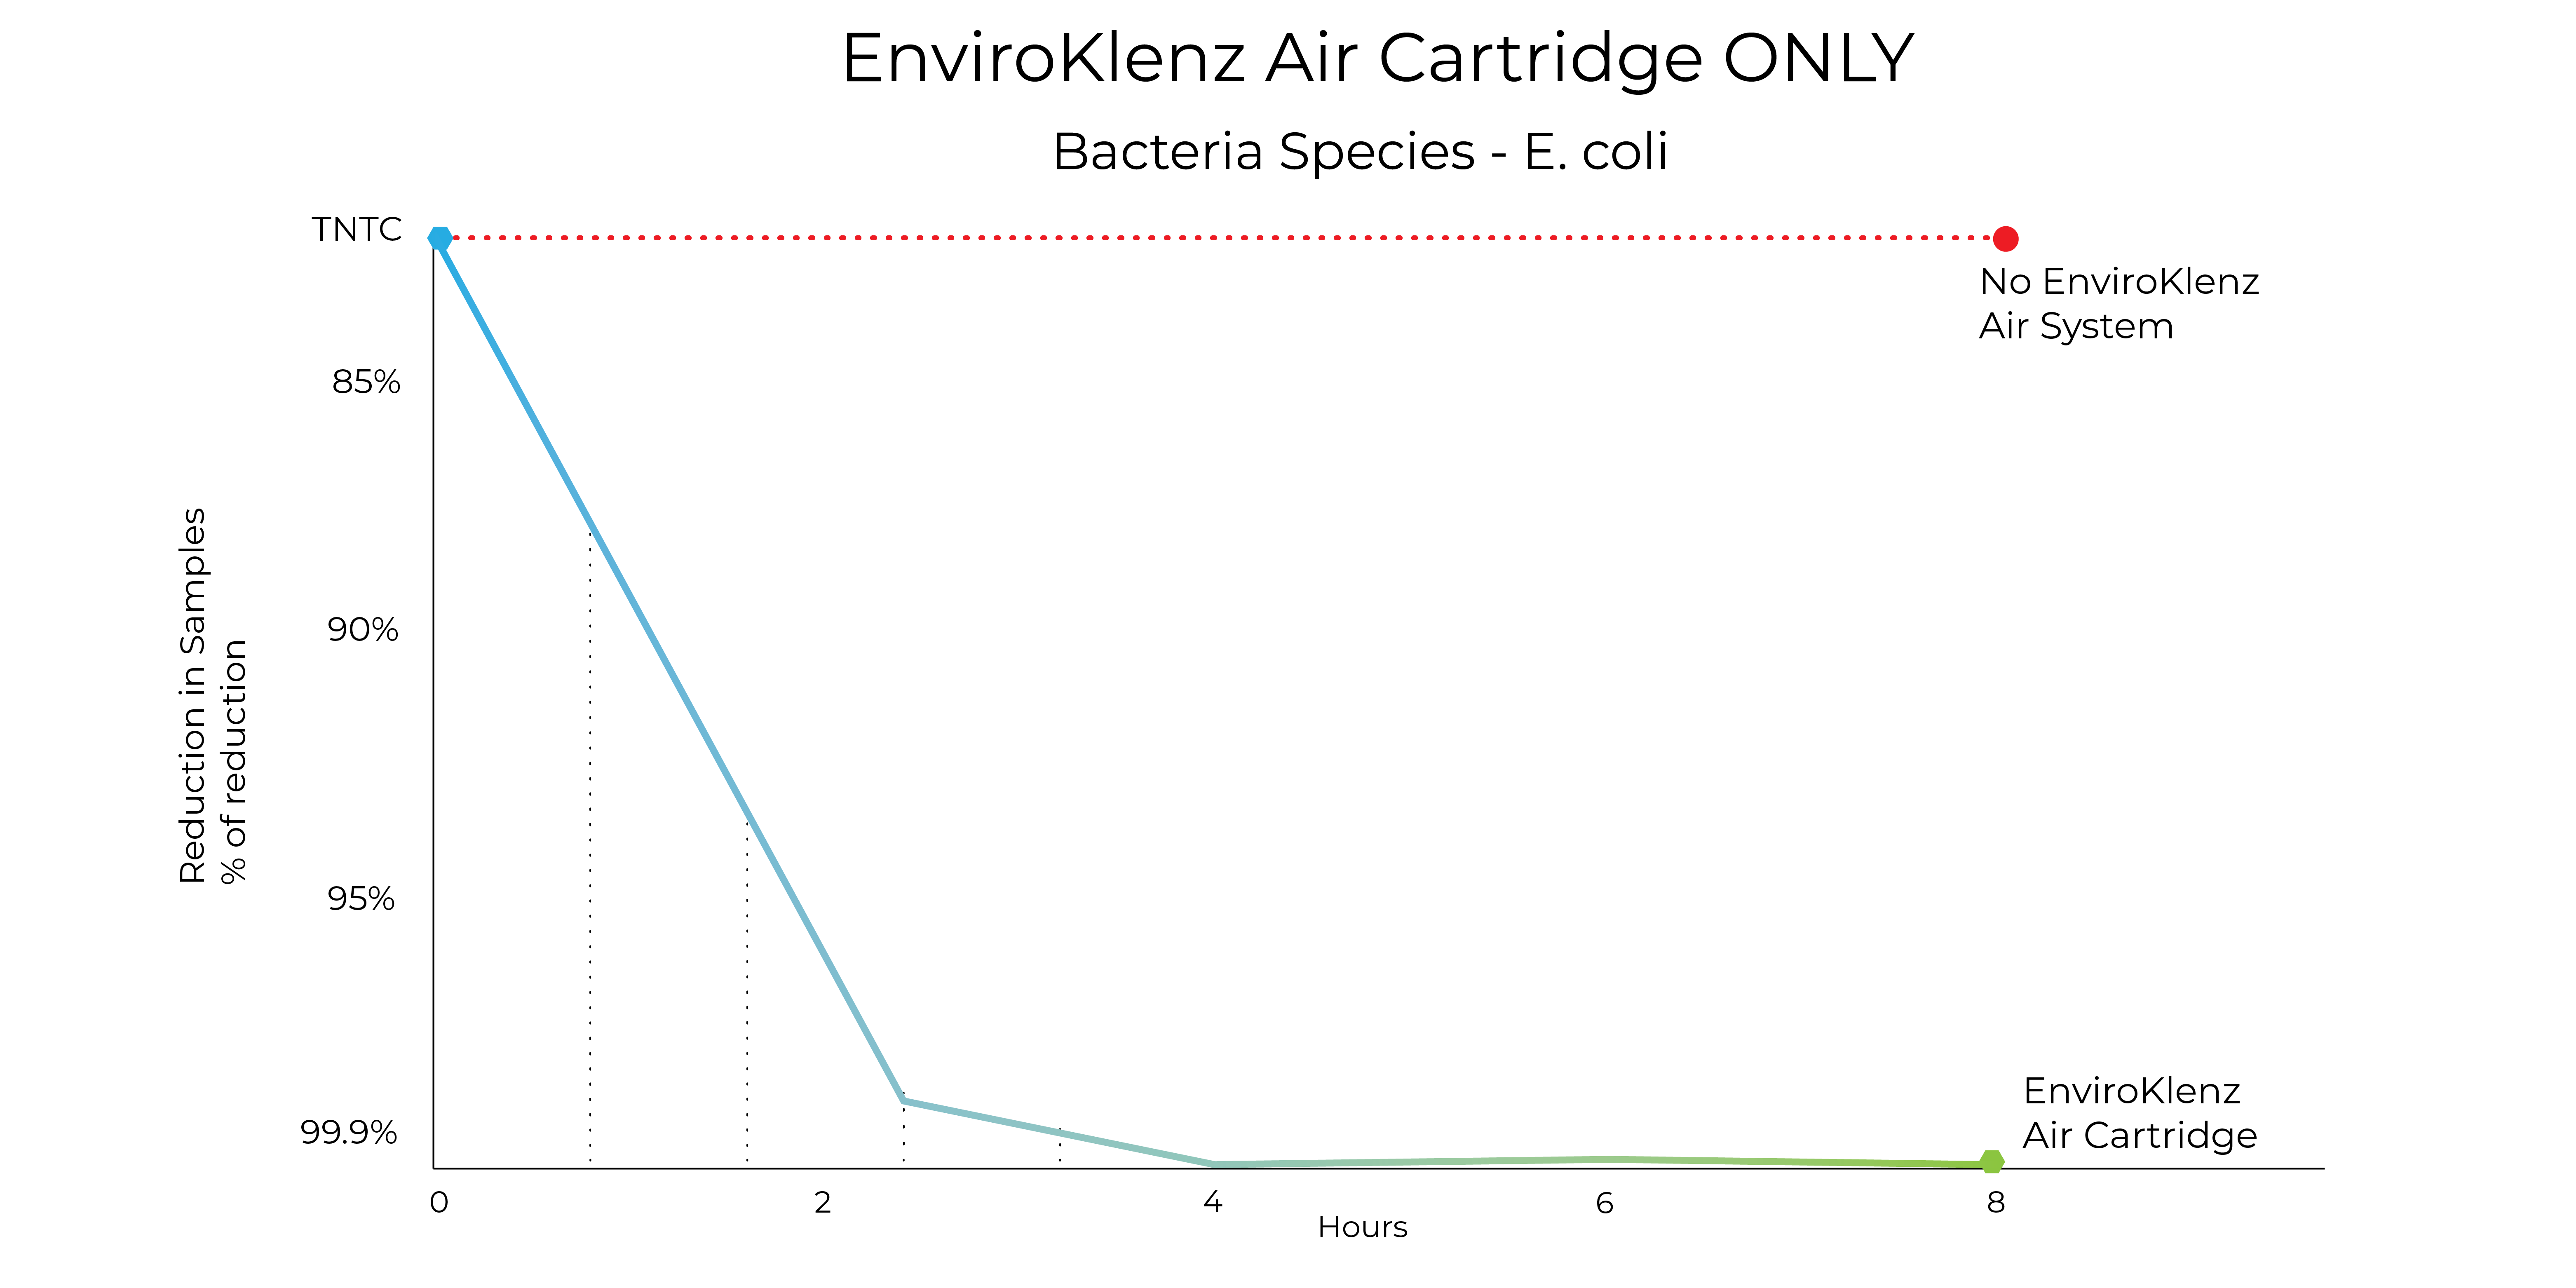 EnviroKlenz Air Cartridge vs. E. Coli